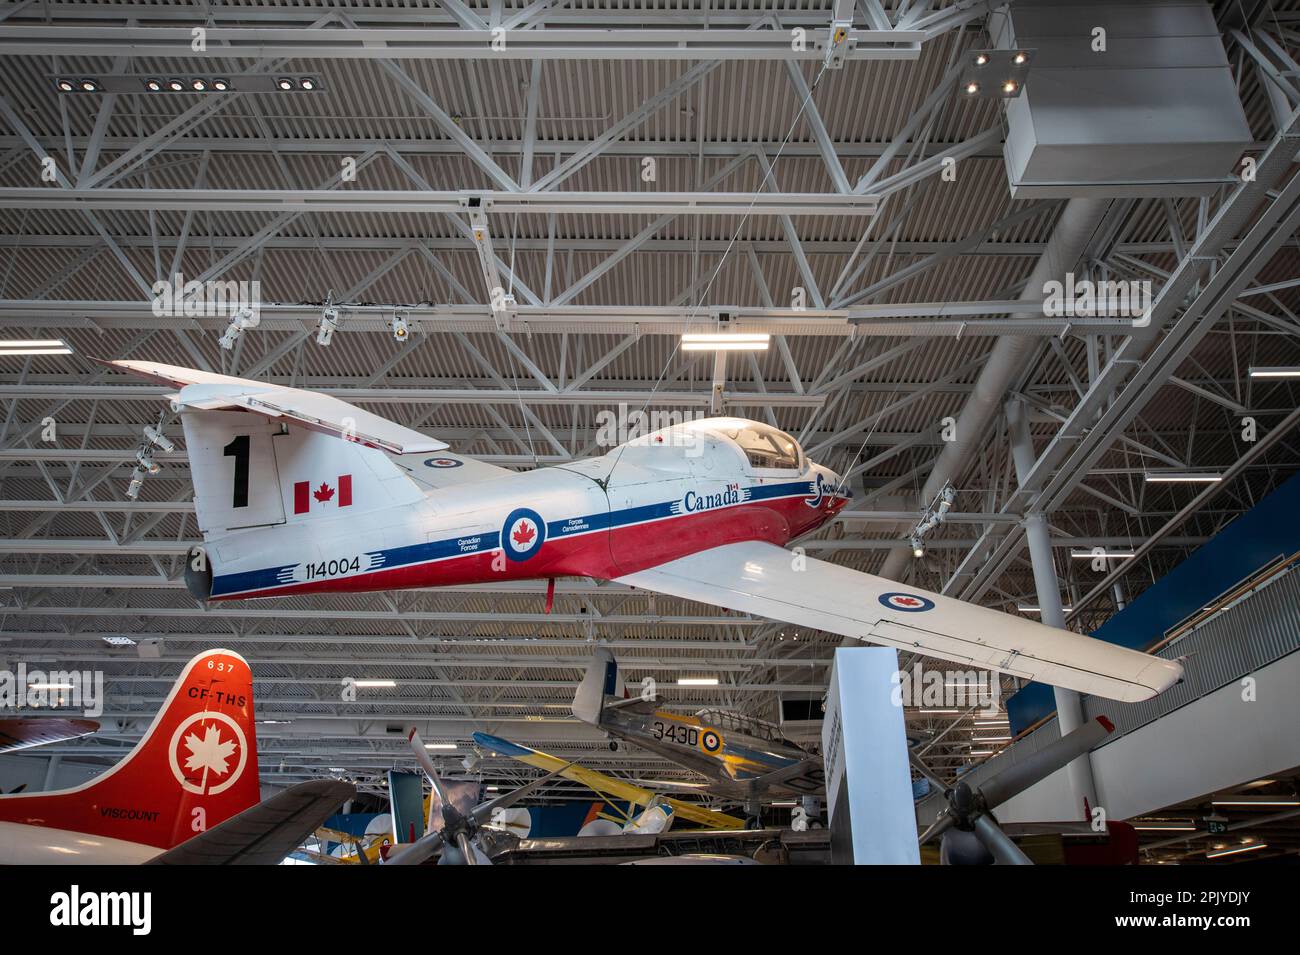 Snowbird at the Royal Aviation Museum of Western Canada in Winnipeg, Manitoba, Canada Stock Photo